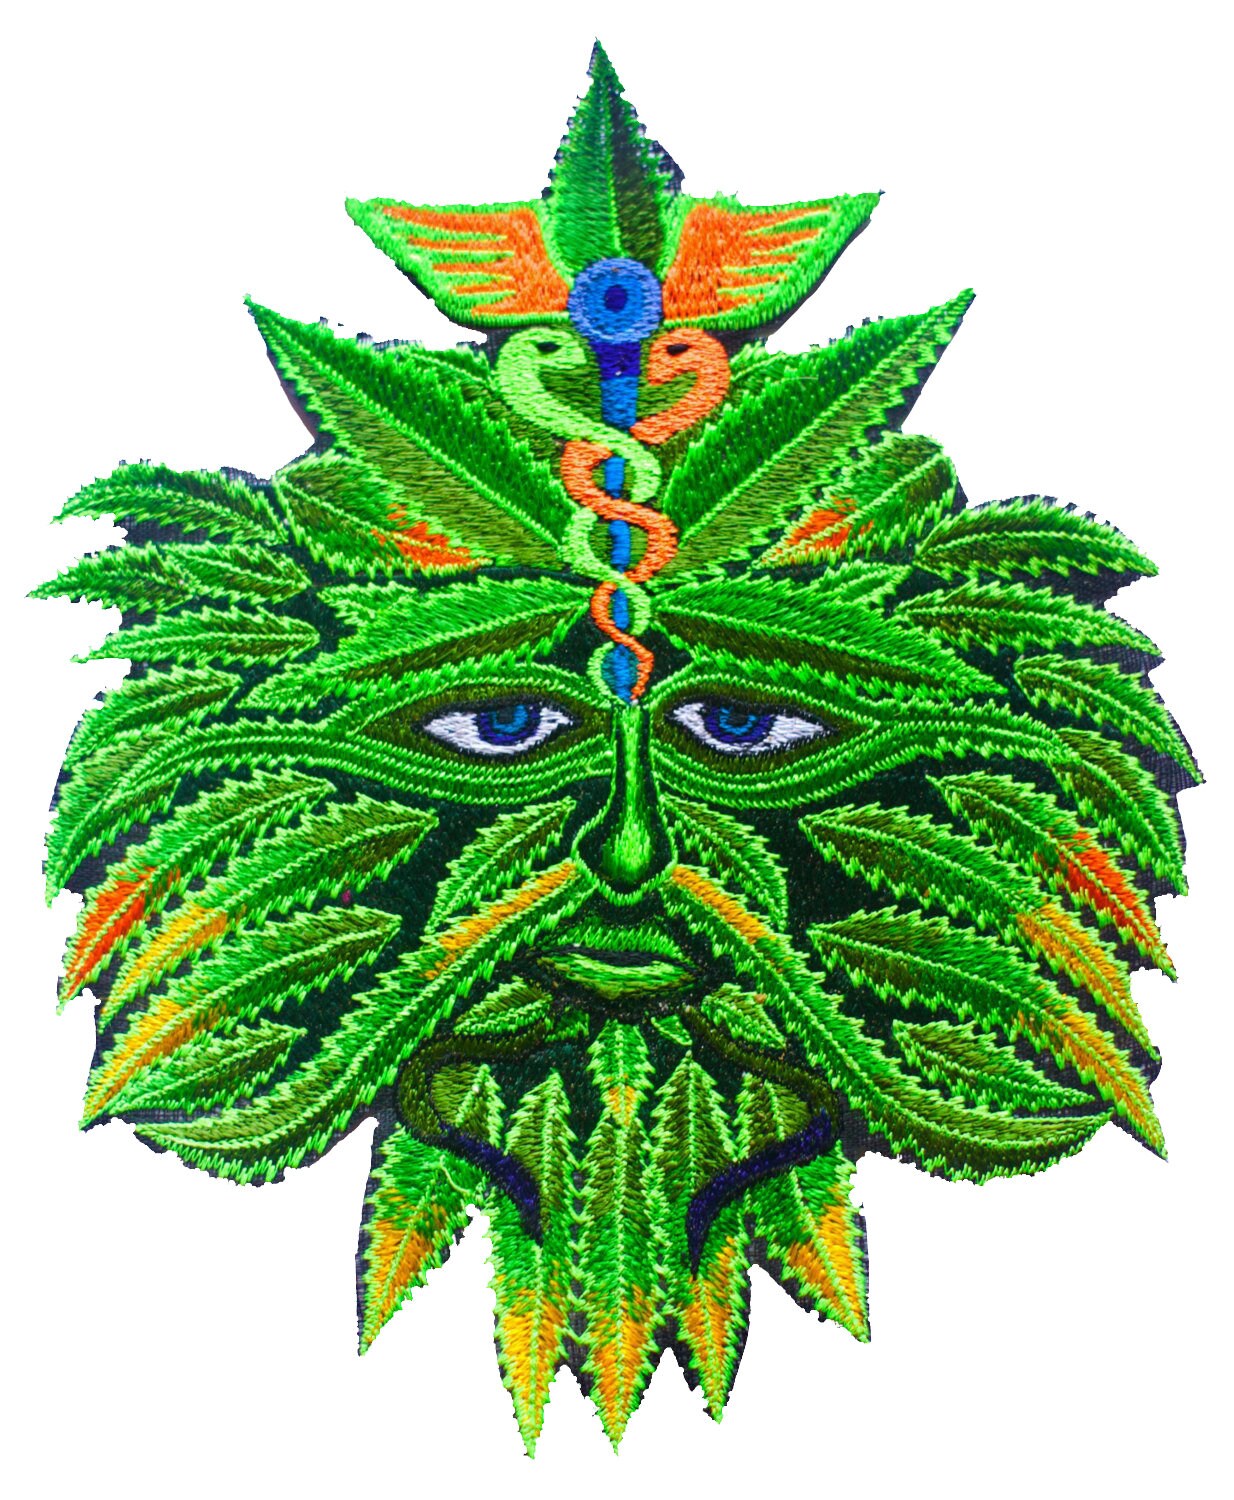 Medical Marihuana T-Shirt hippie weed goa tshirt psychedelic goa trance THC spirit weed healing hemp embroidery shirt